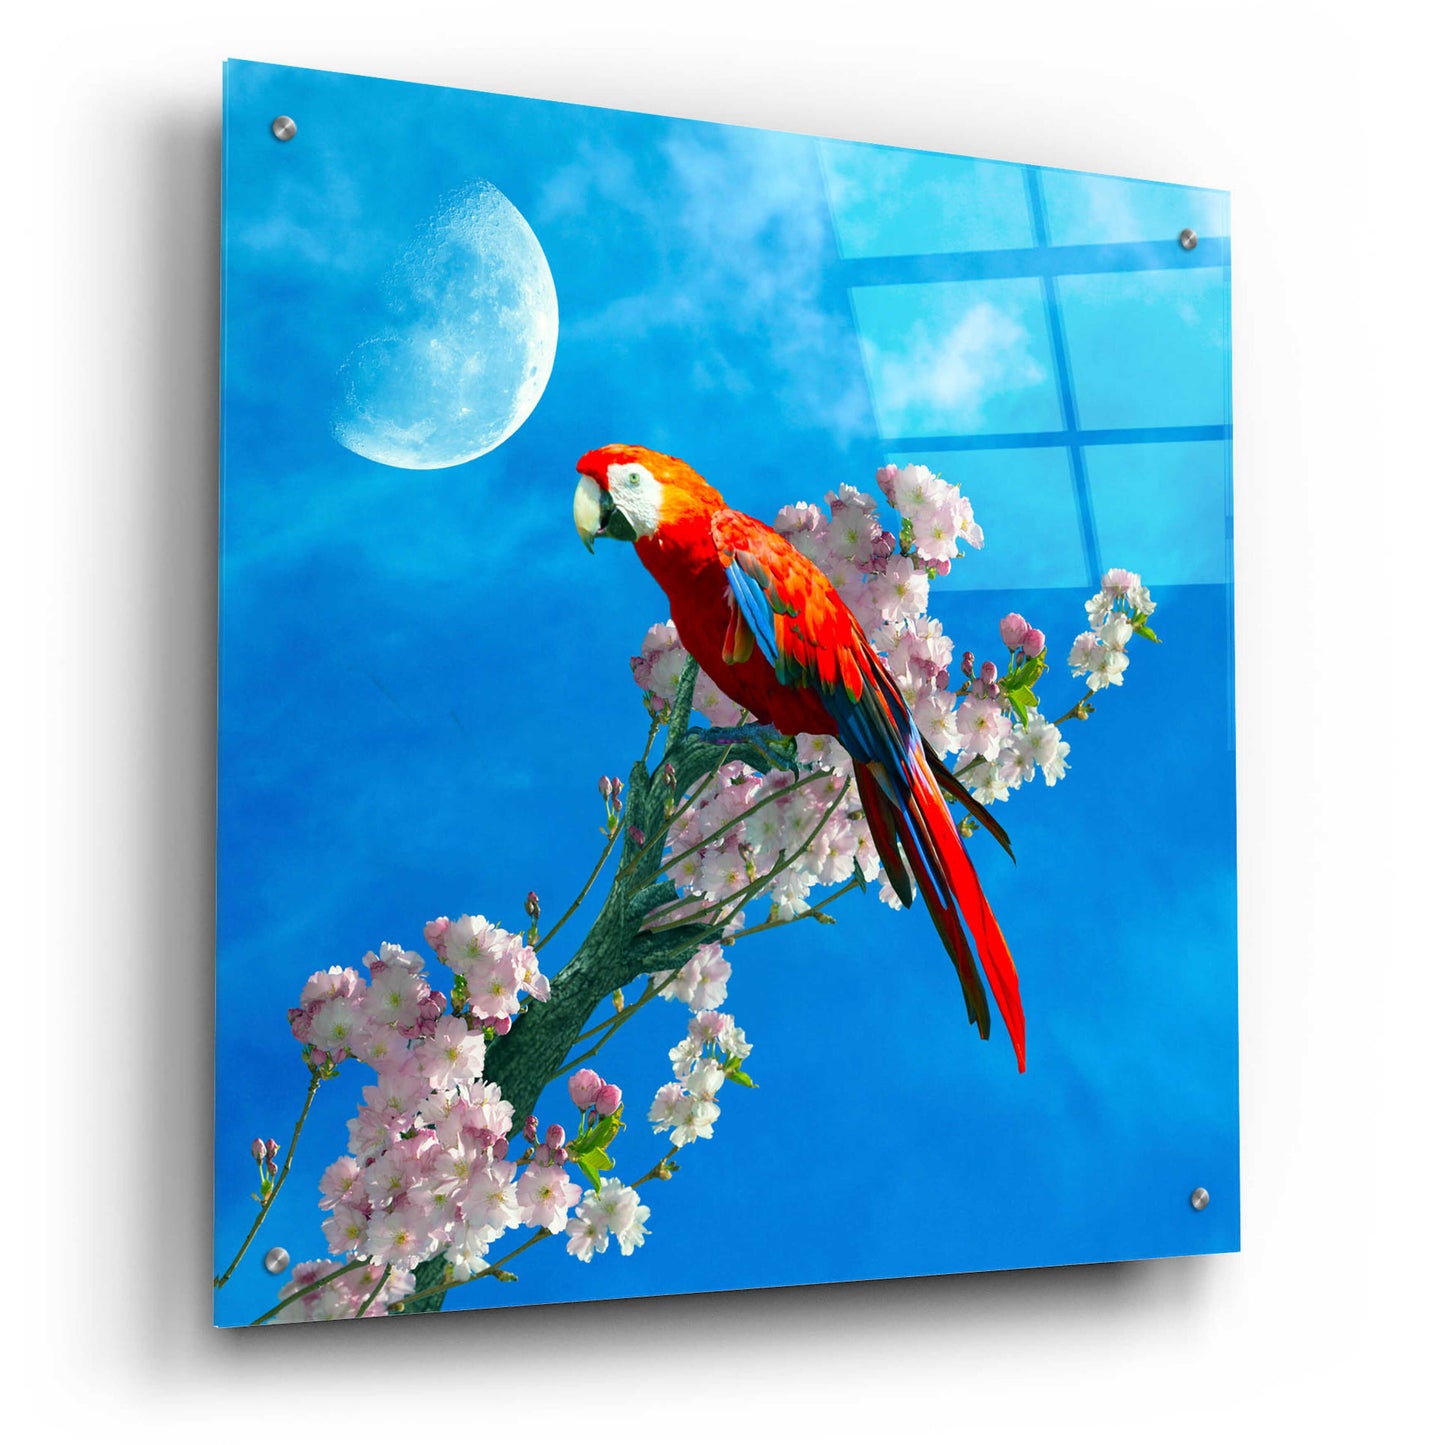 Epic Art 'Red Parrot' by Ata Alishahi, Acrylic Glass Wall Art,24x24